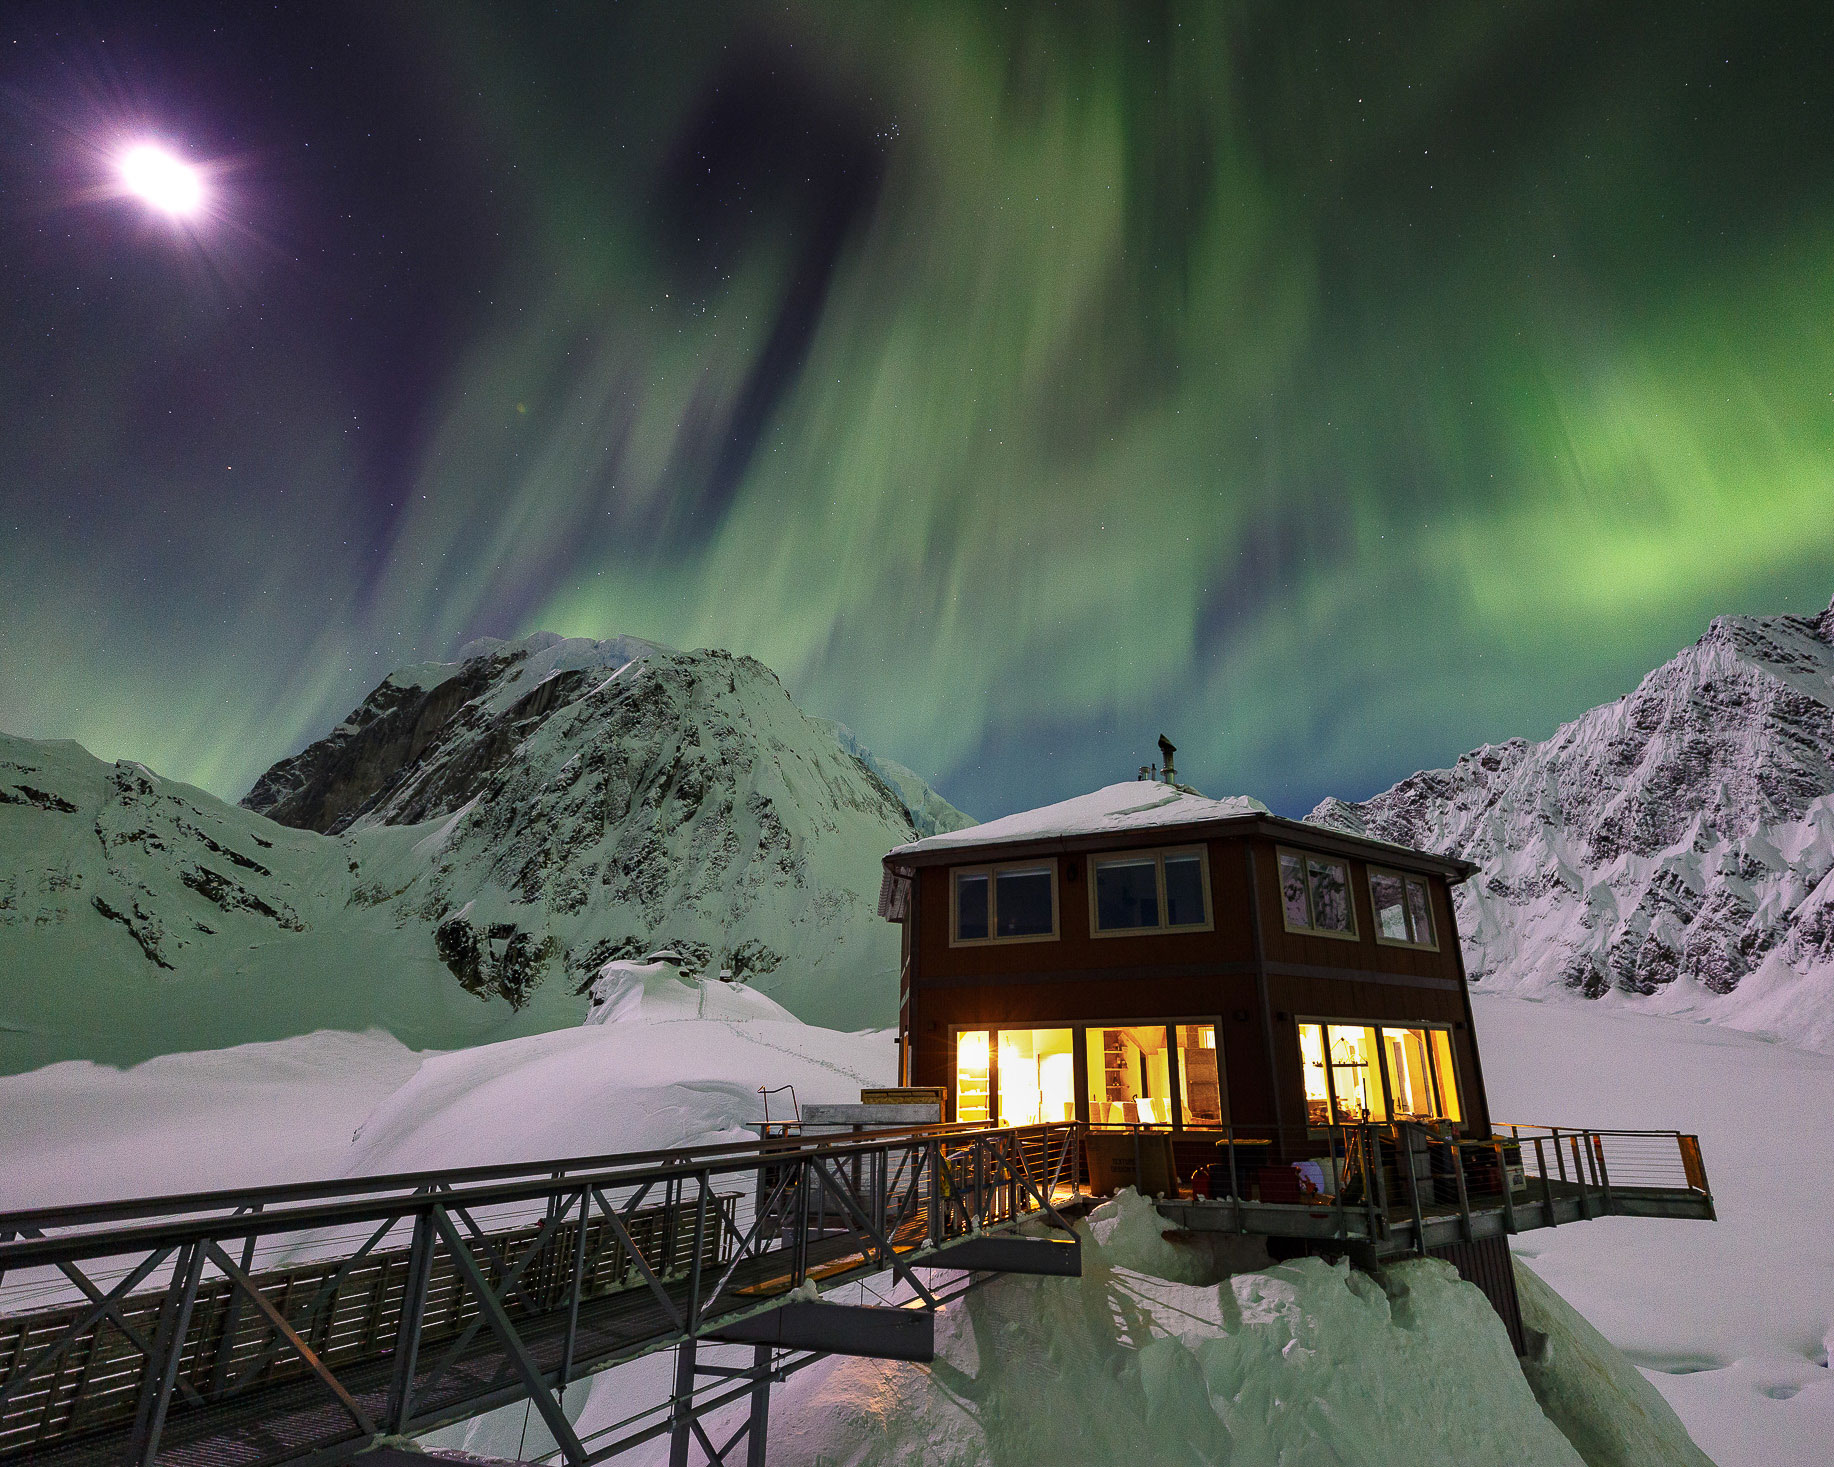 Alaska Wilderness Lodge Experience - Sheldon Chalet beneath the incredible Northern Lights.